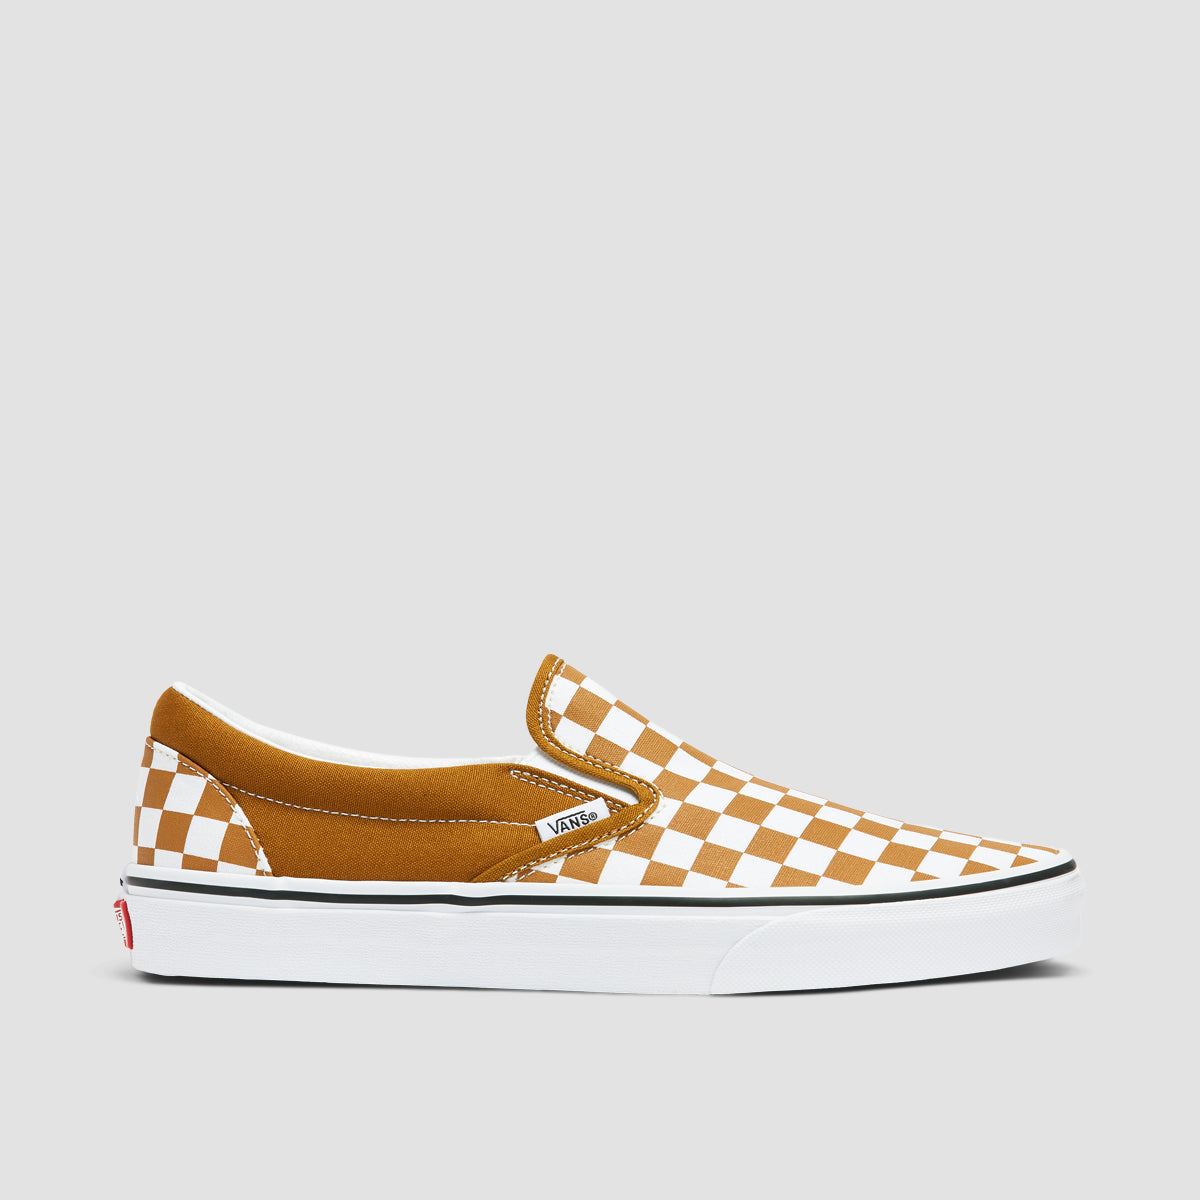 Vans Classic Slip-On Shoes - Checkerboard Golden Brown